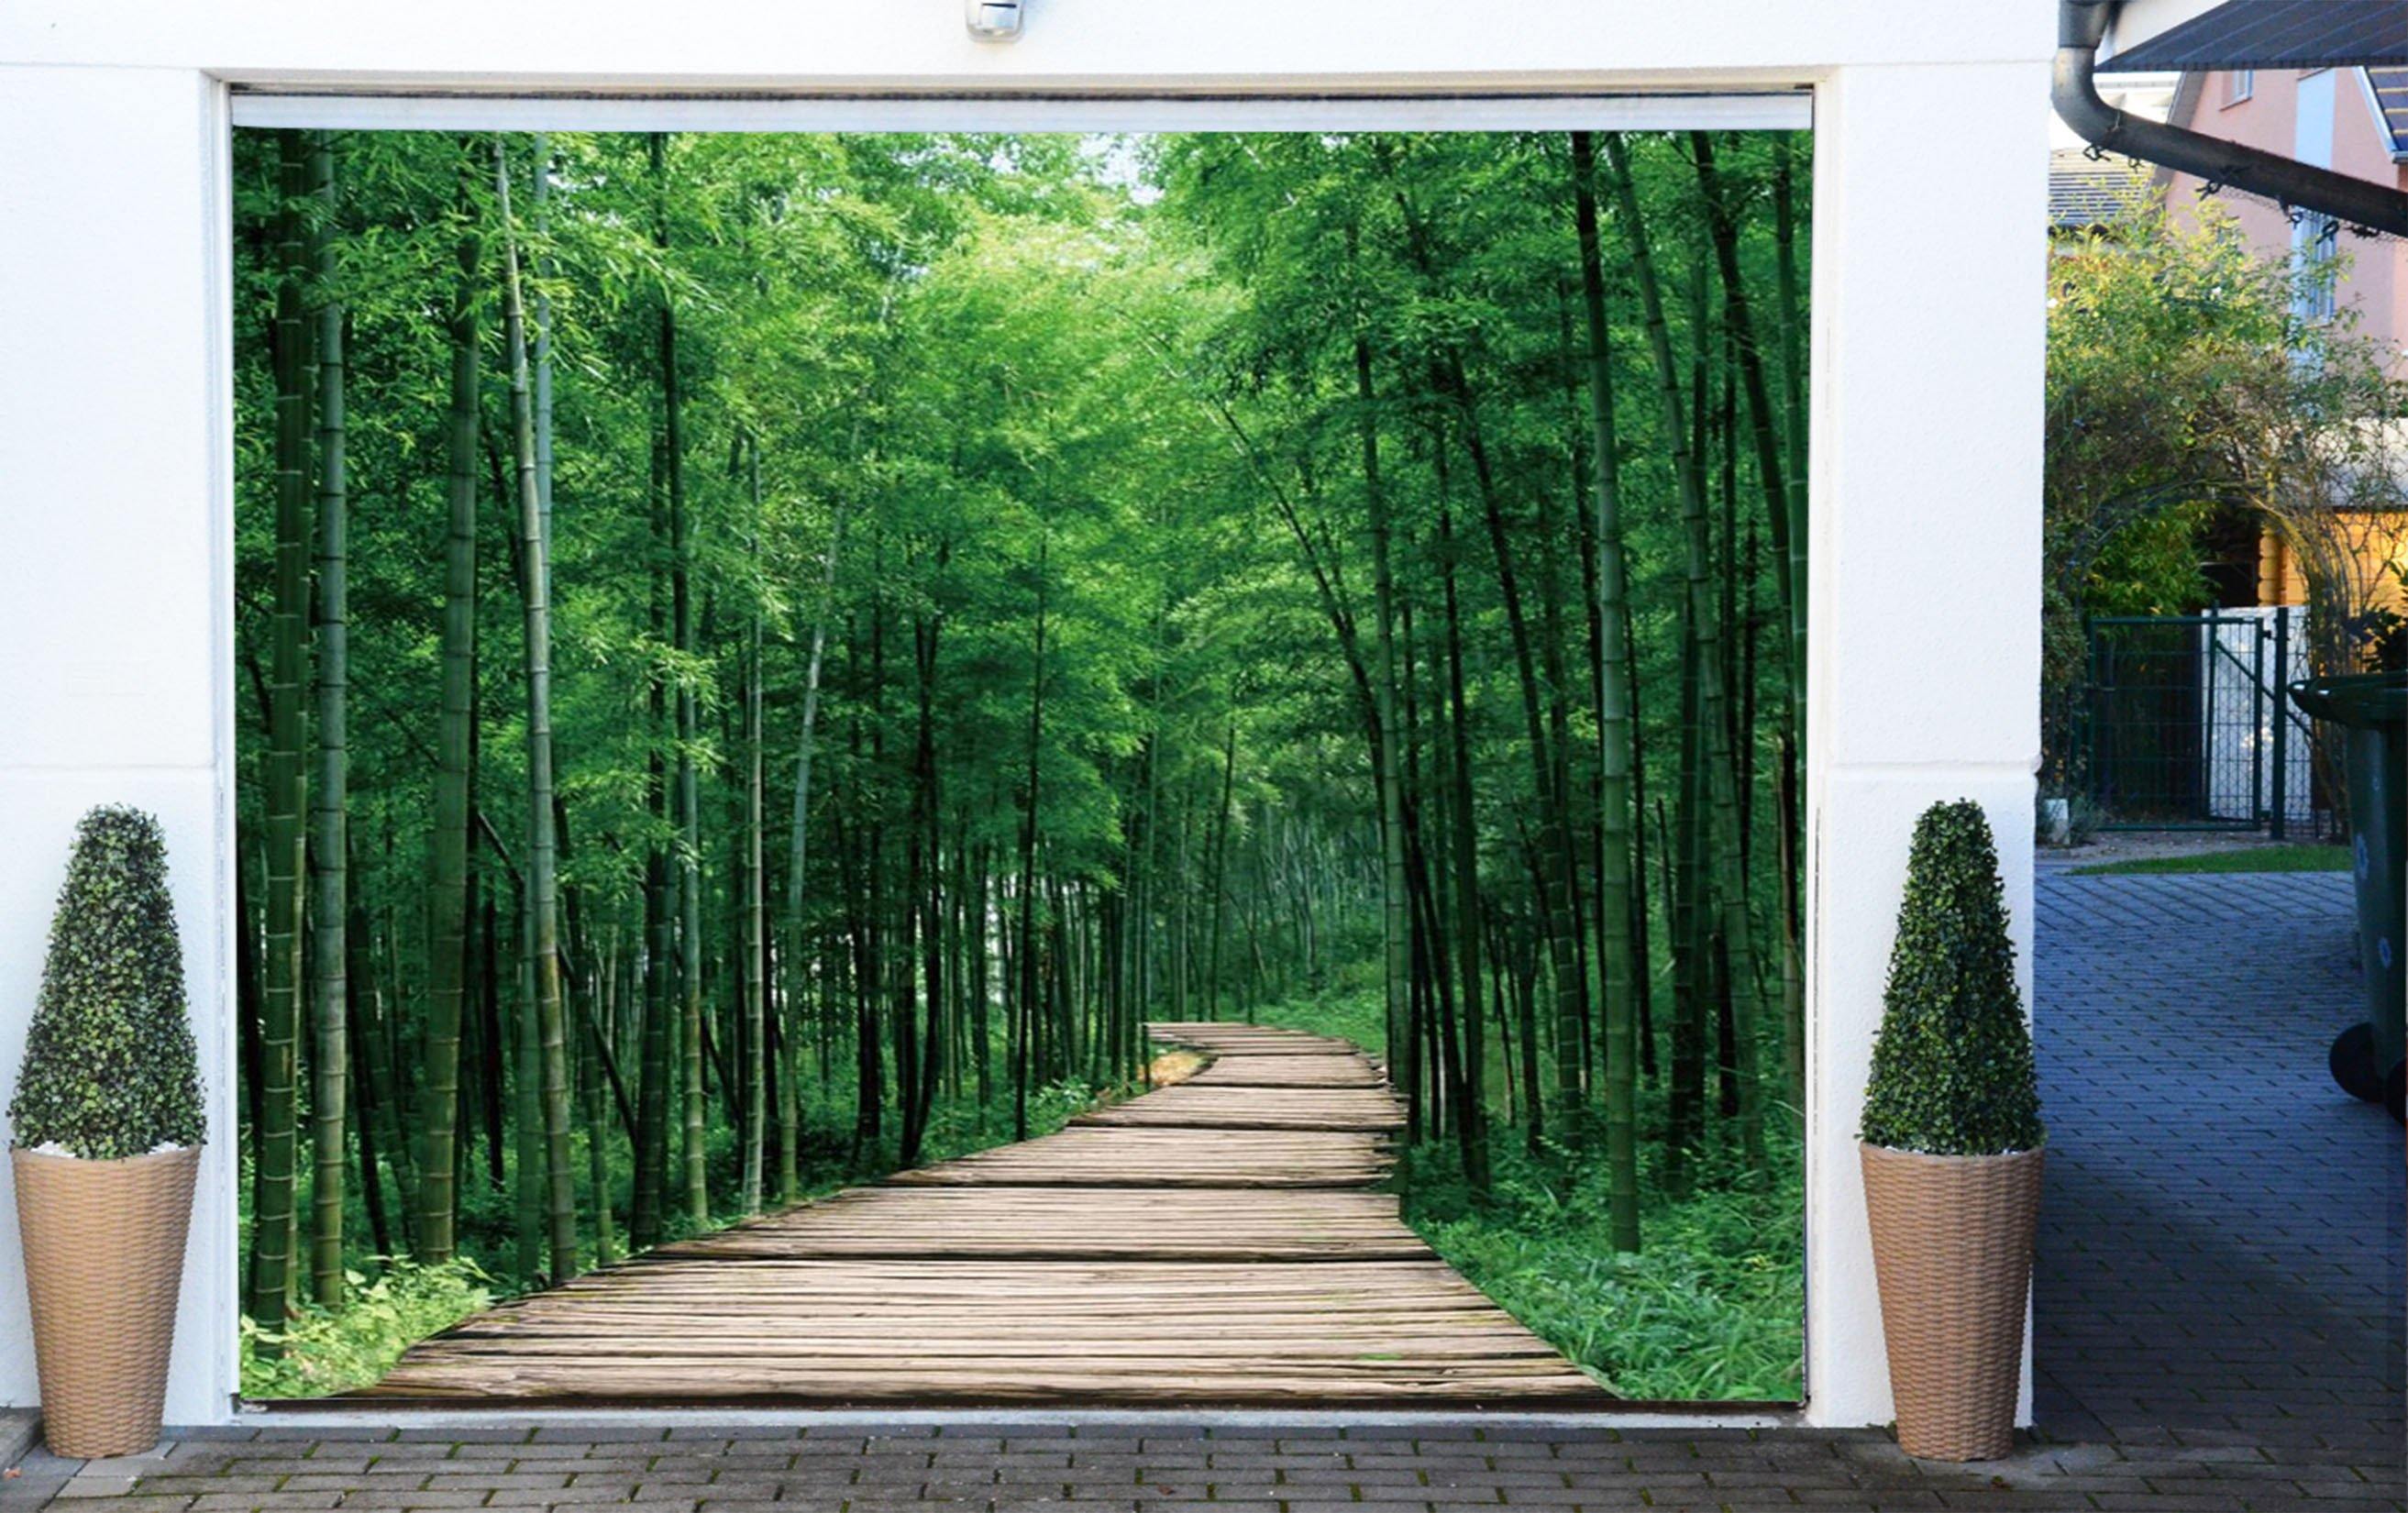 3D Bamboo Forest Wood Road 013 Garage Door Mural Wallpaper AJ Wallpaper 